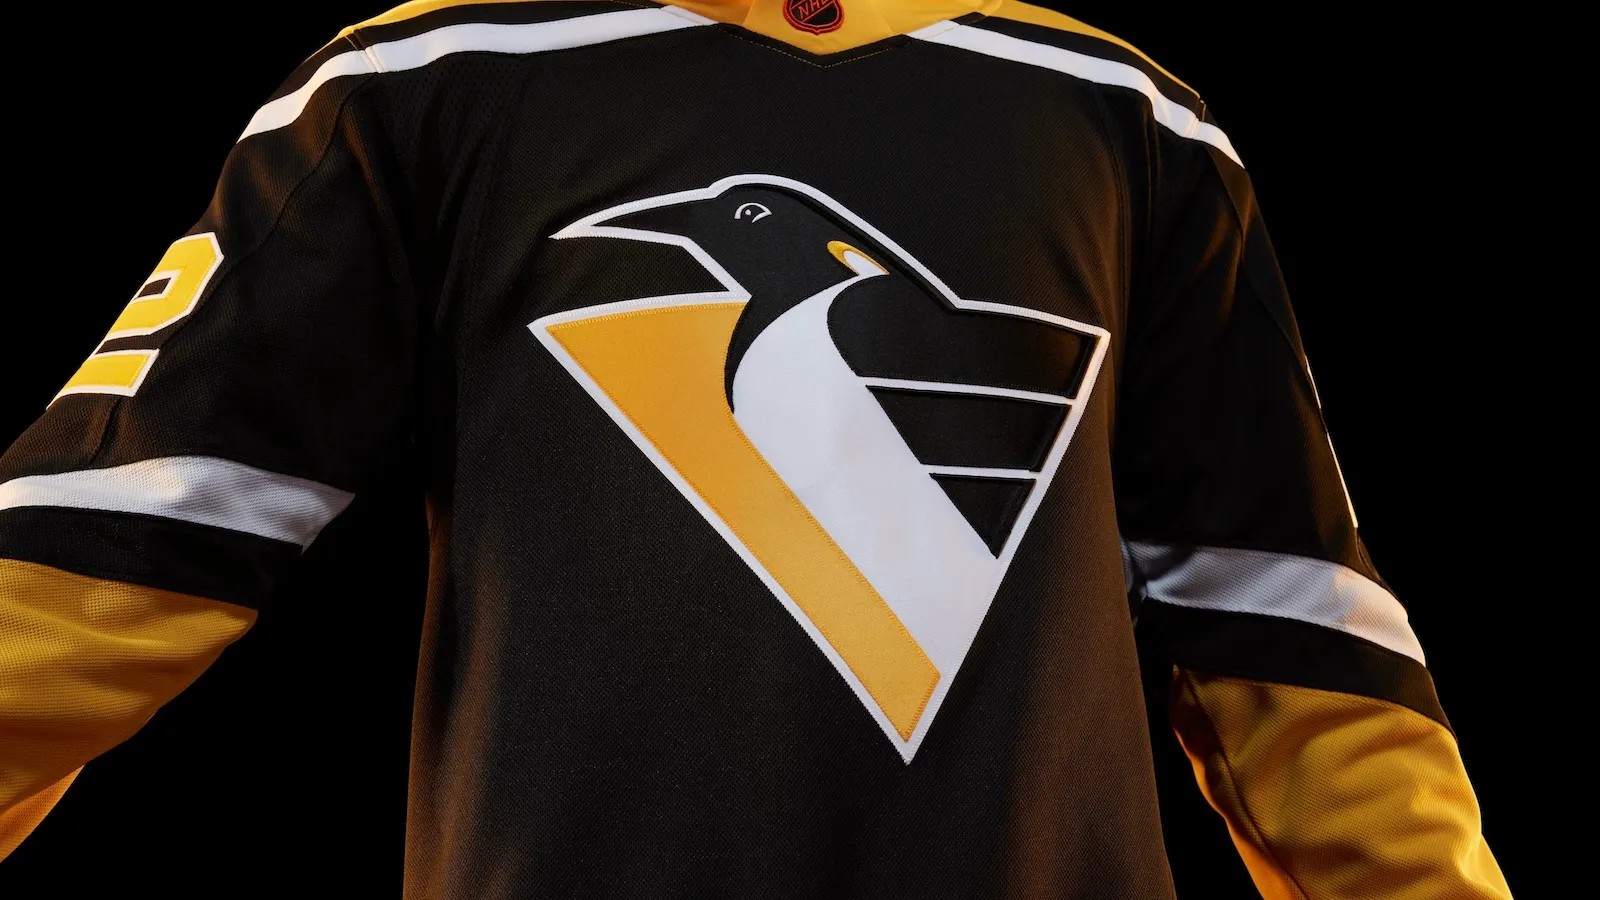 RoboPenguin returns as Penguins' 'Reverse Retro' jersey